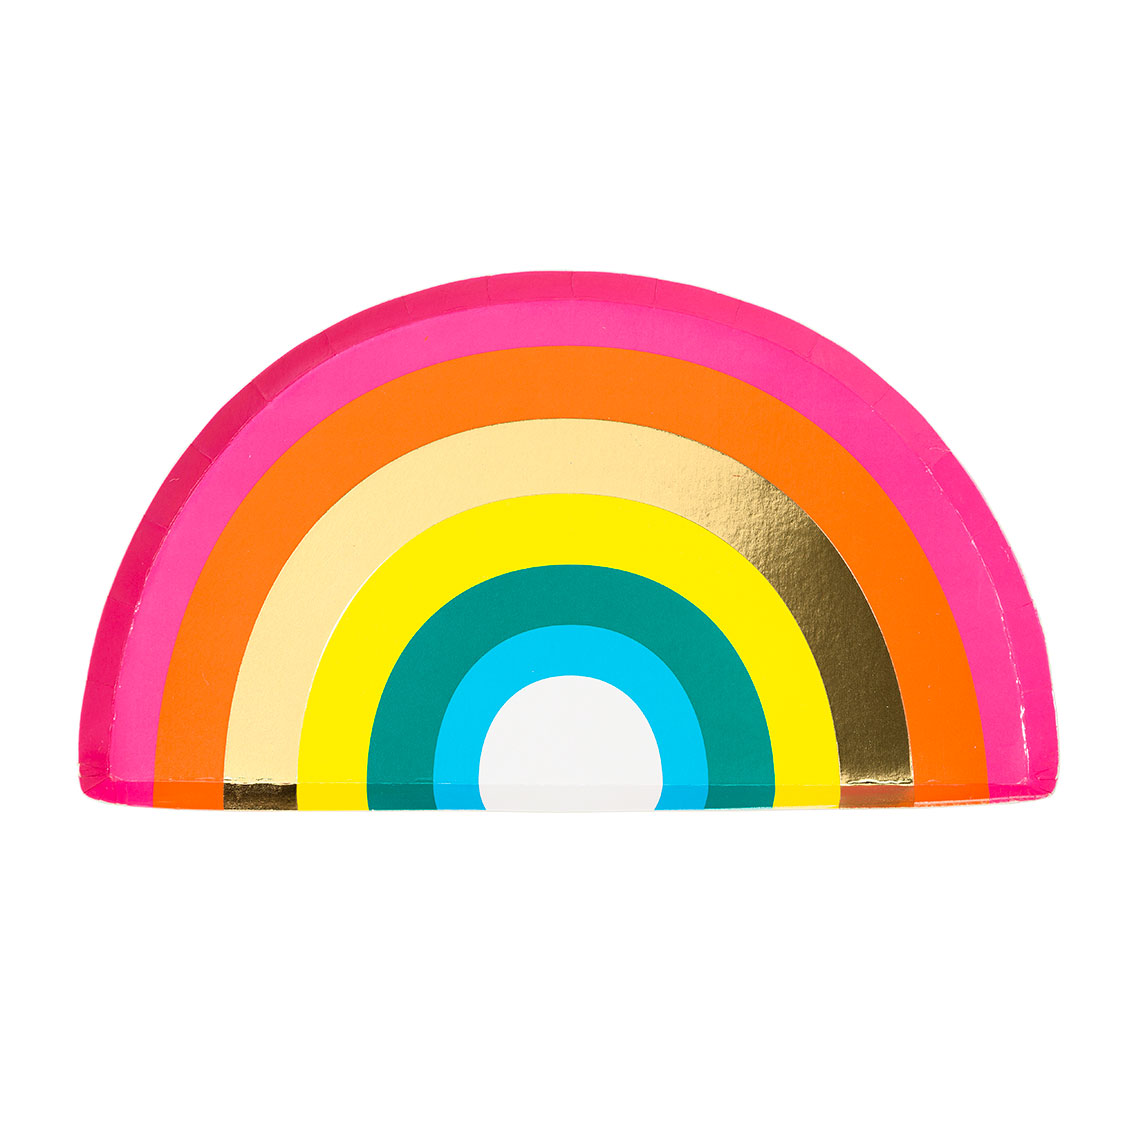  rainbow-shaped paper plates